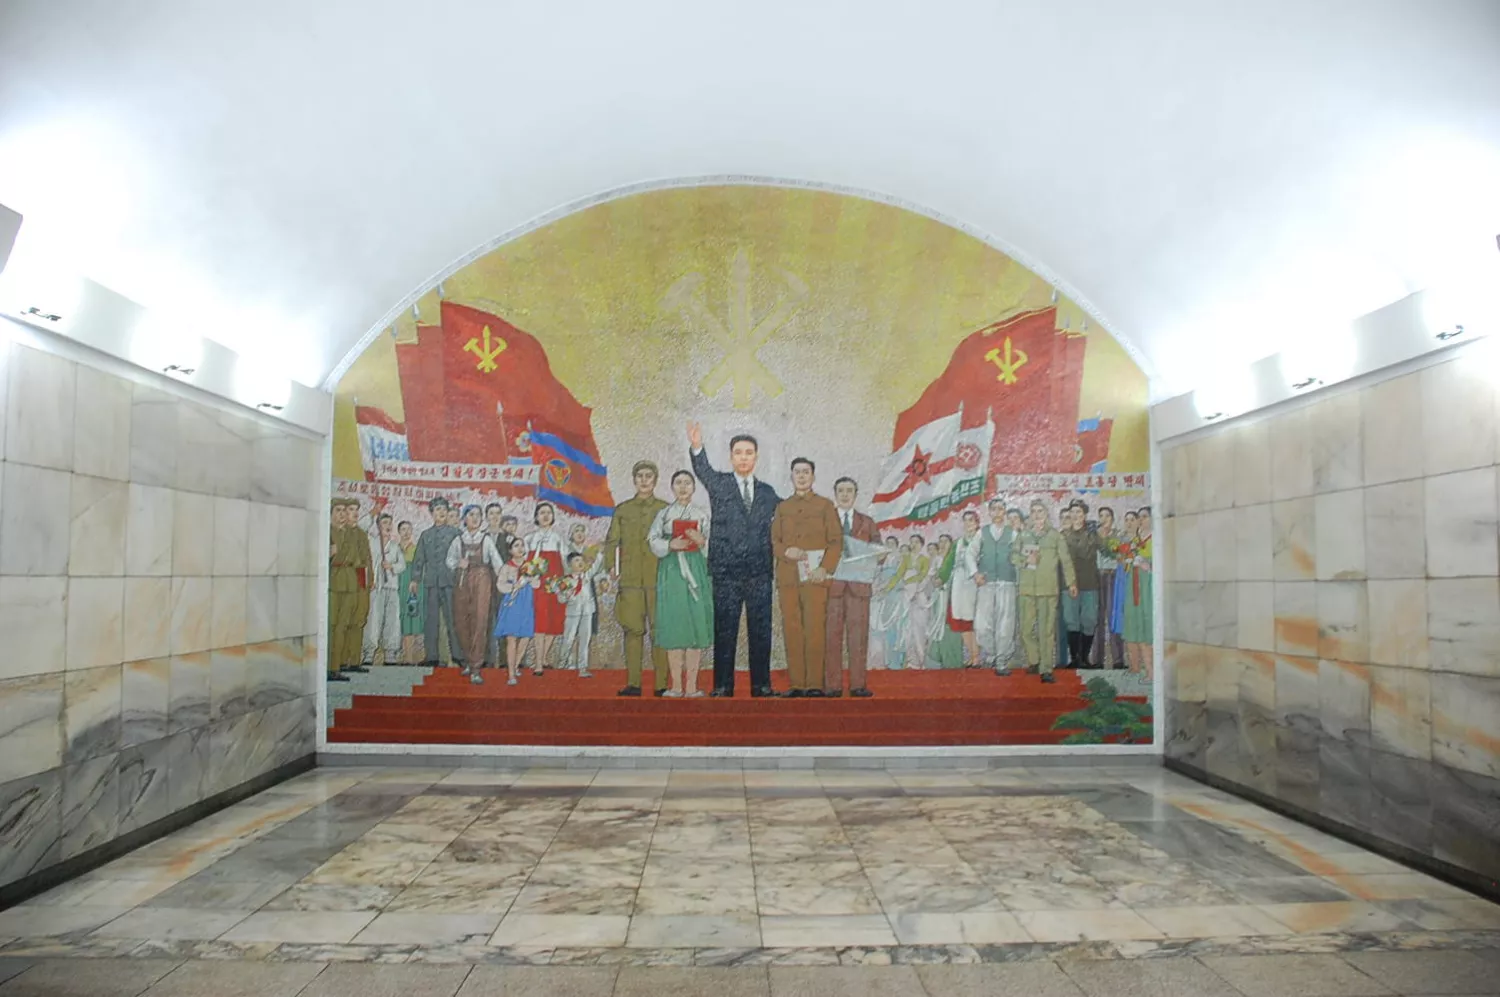 Socialist realist mural at Ponghwa Station in Pyongyang